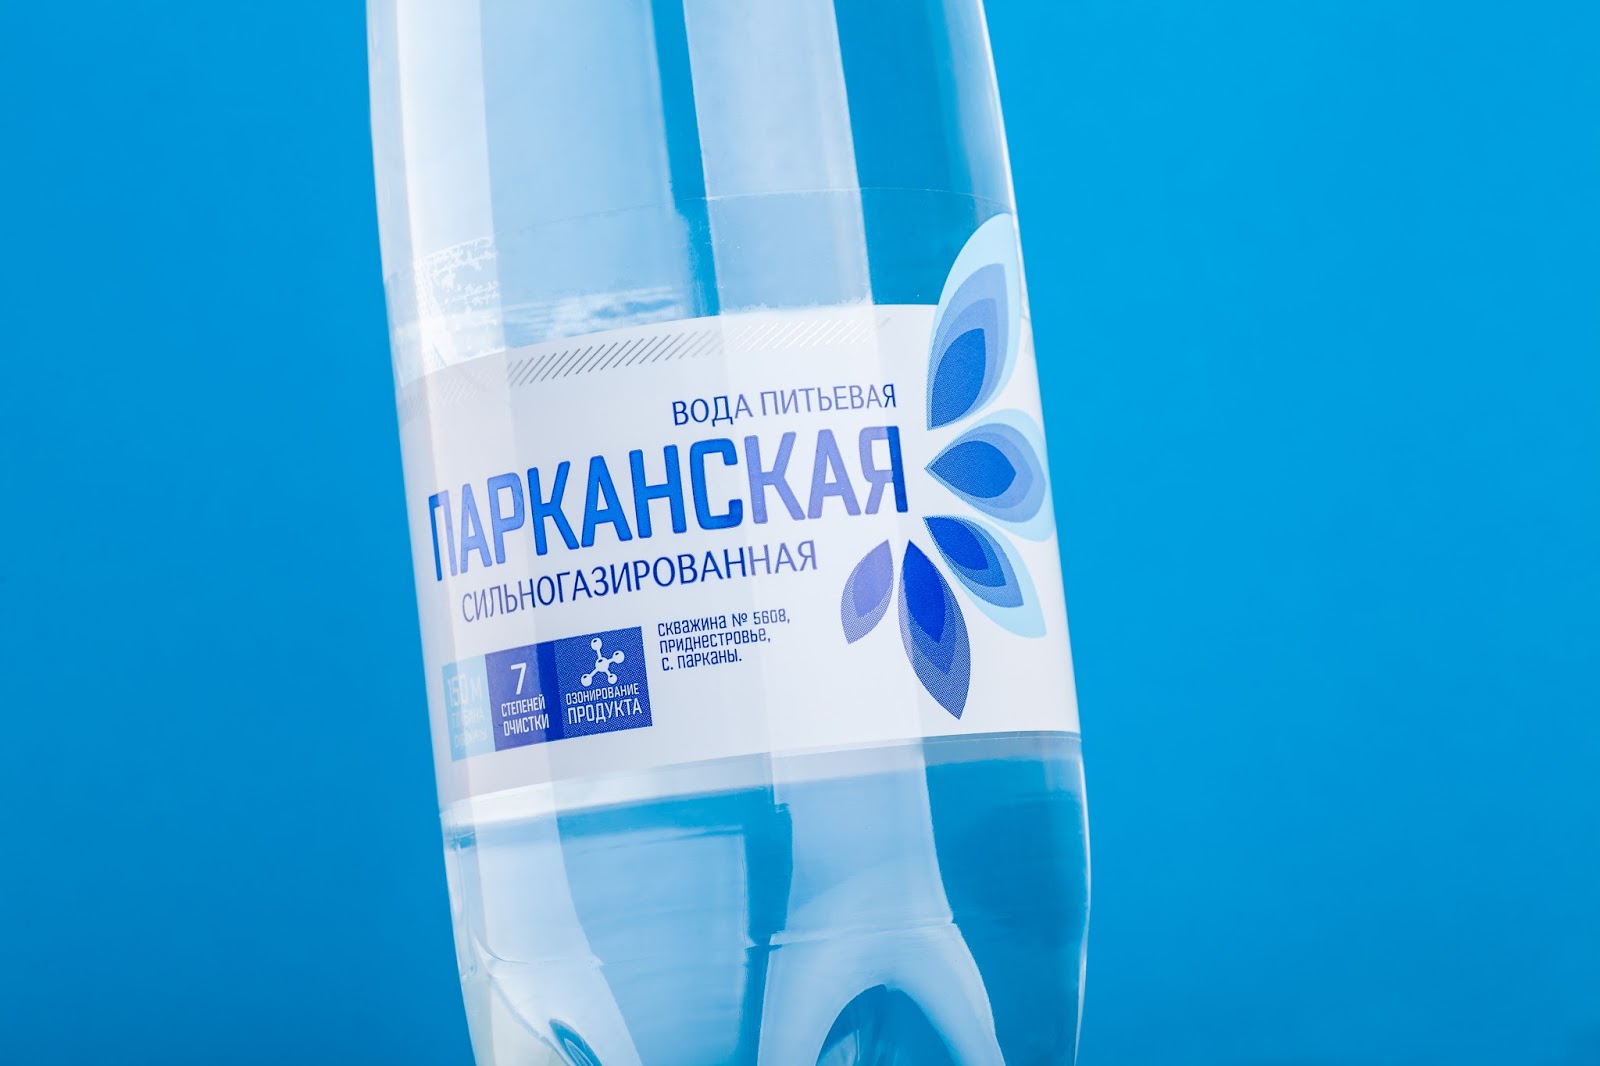 Parkanskaya纯净水包装设计